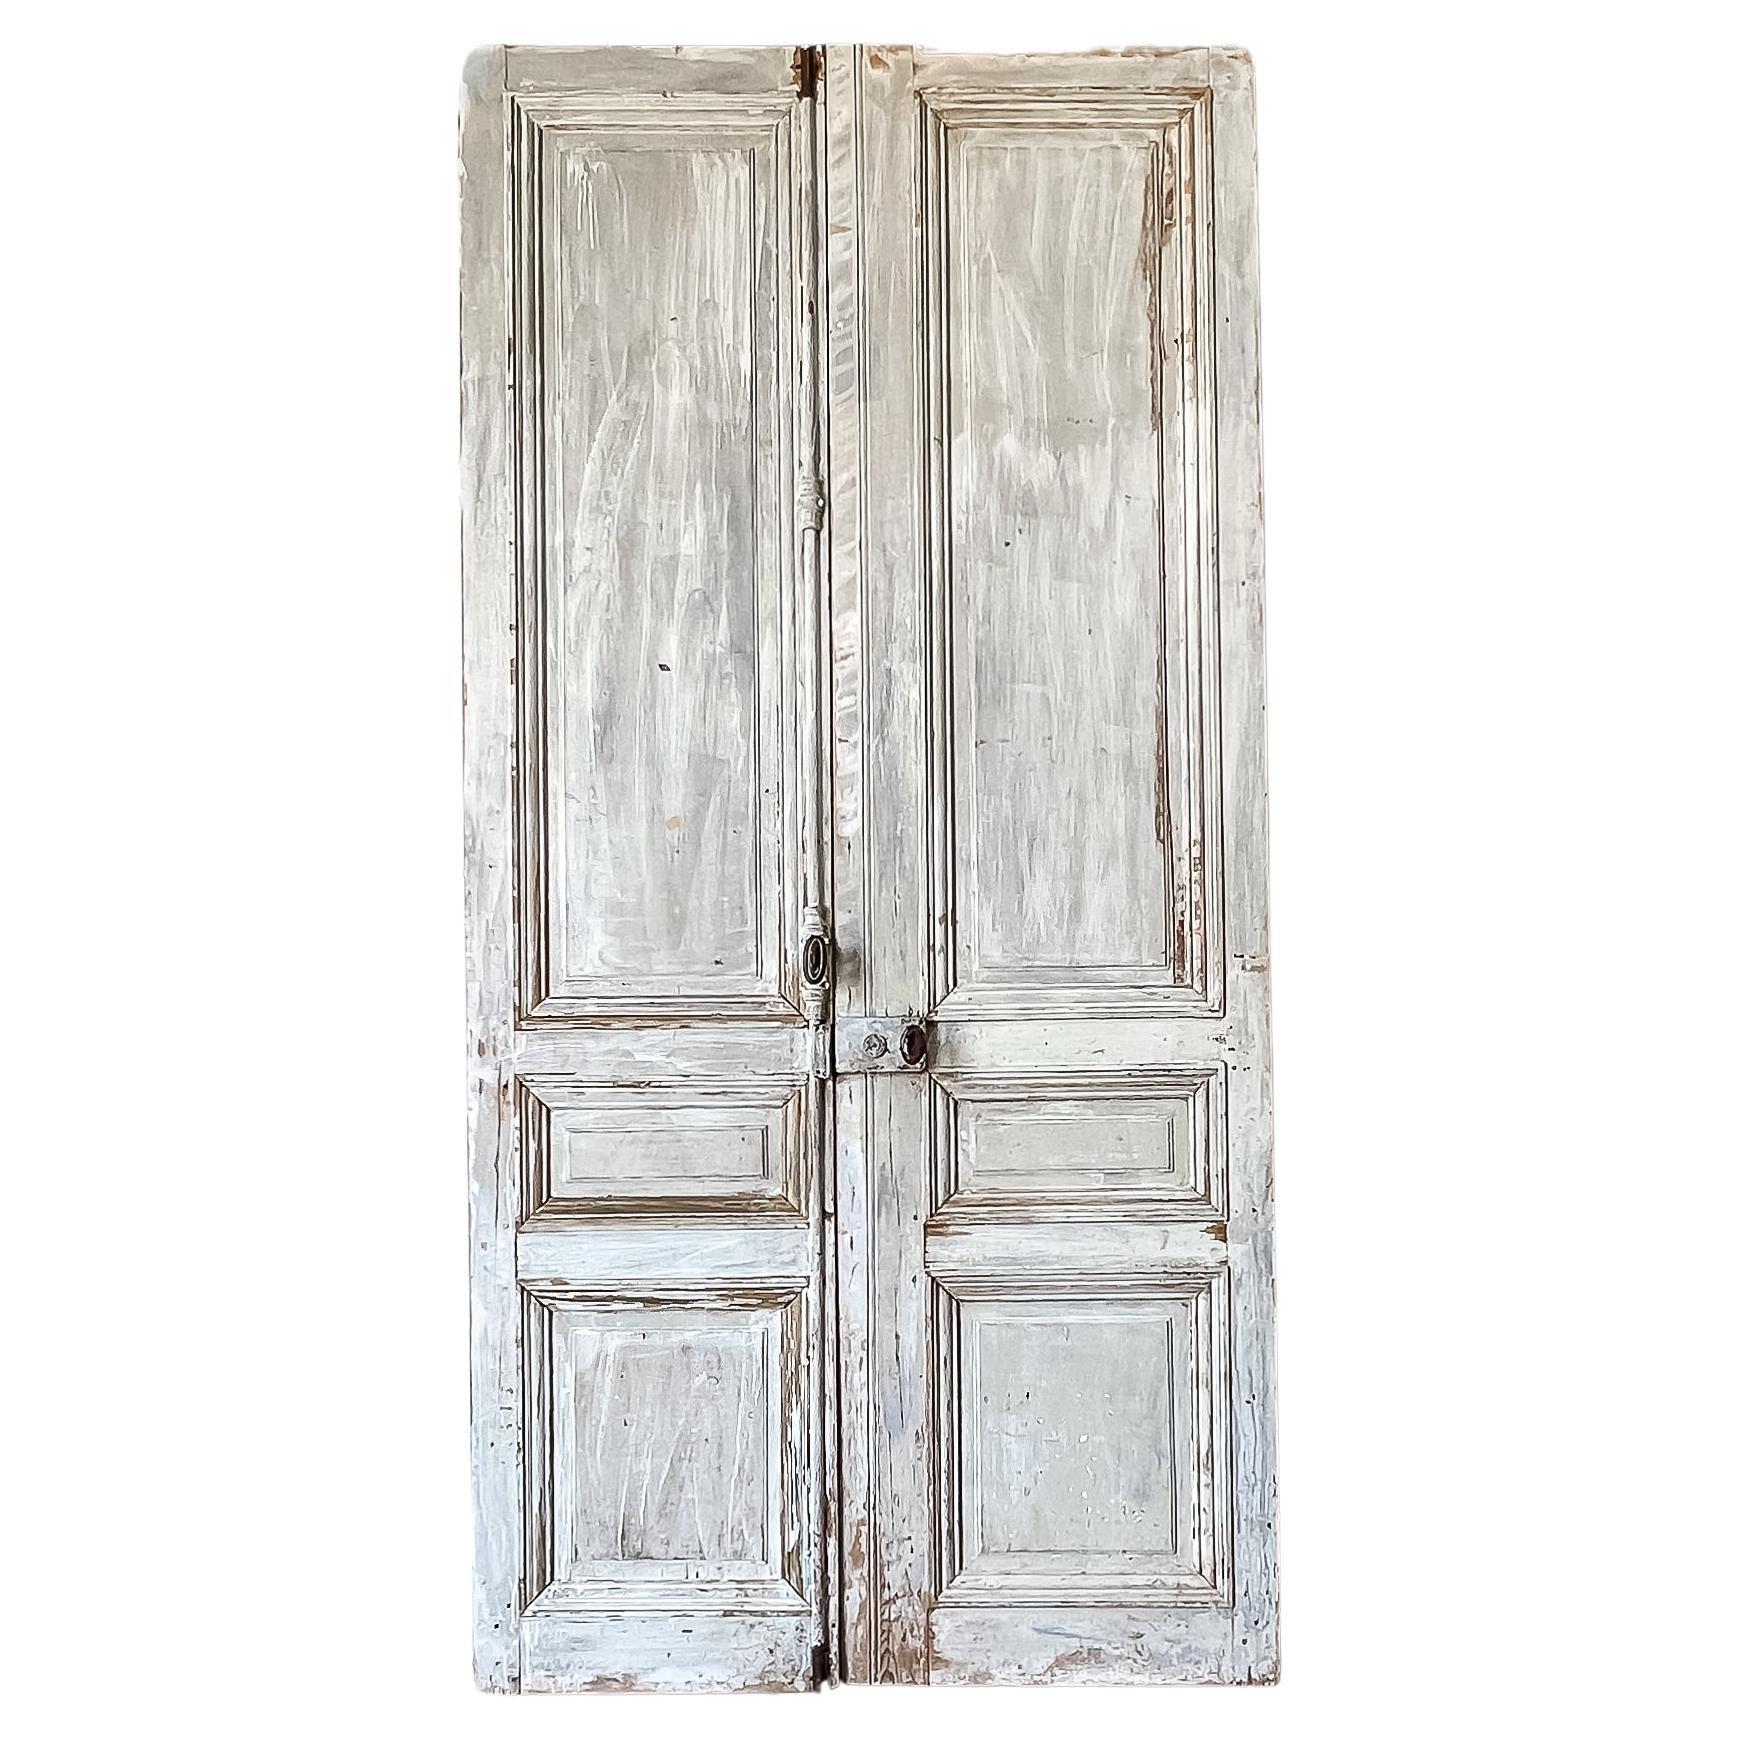 Pair of 19th Century Reclaimed French Oak Interior Doors